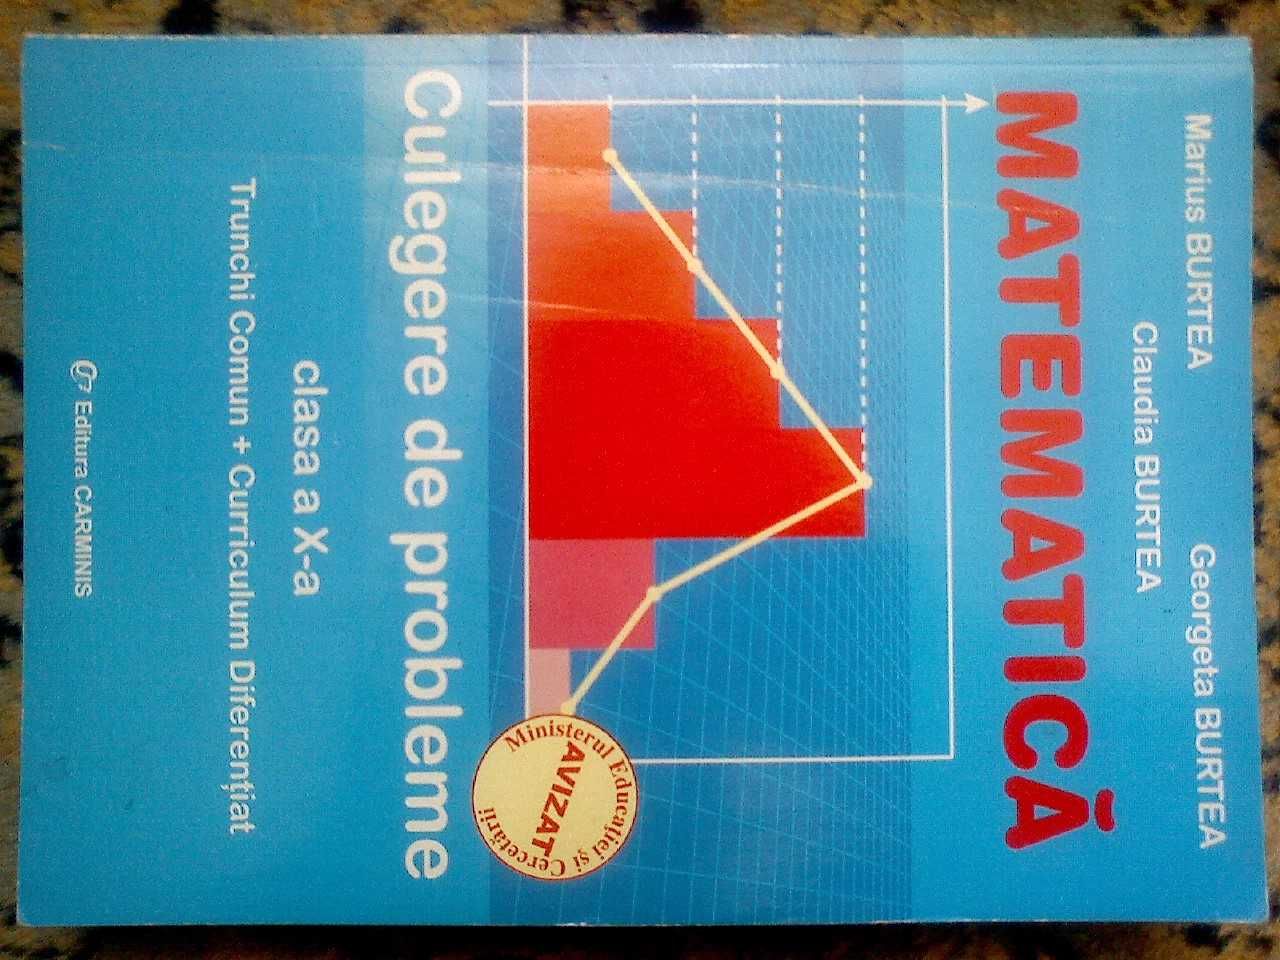 manual matematica manuale scolare diverse